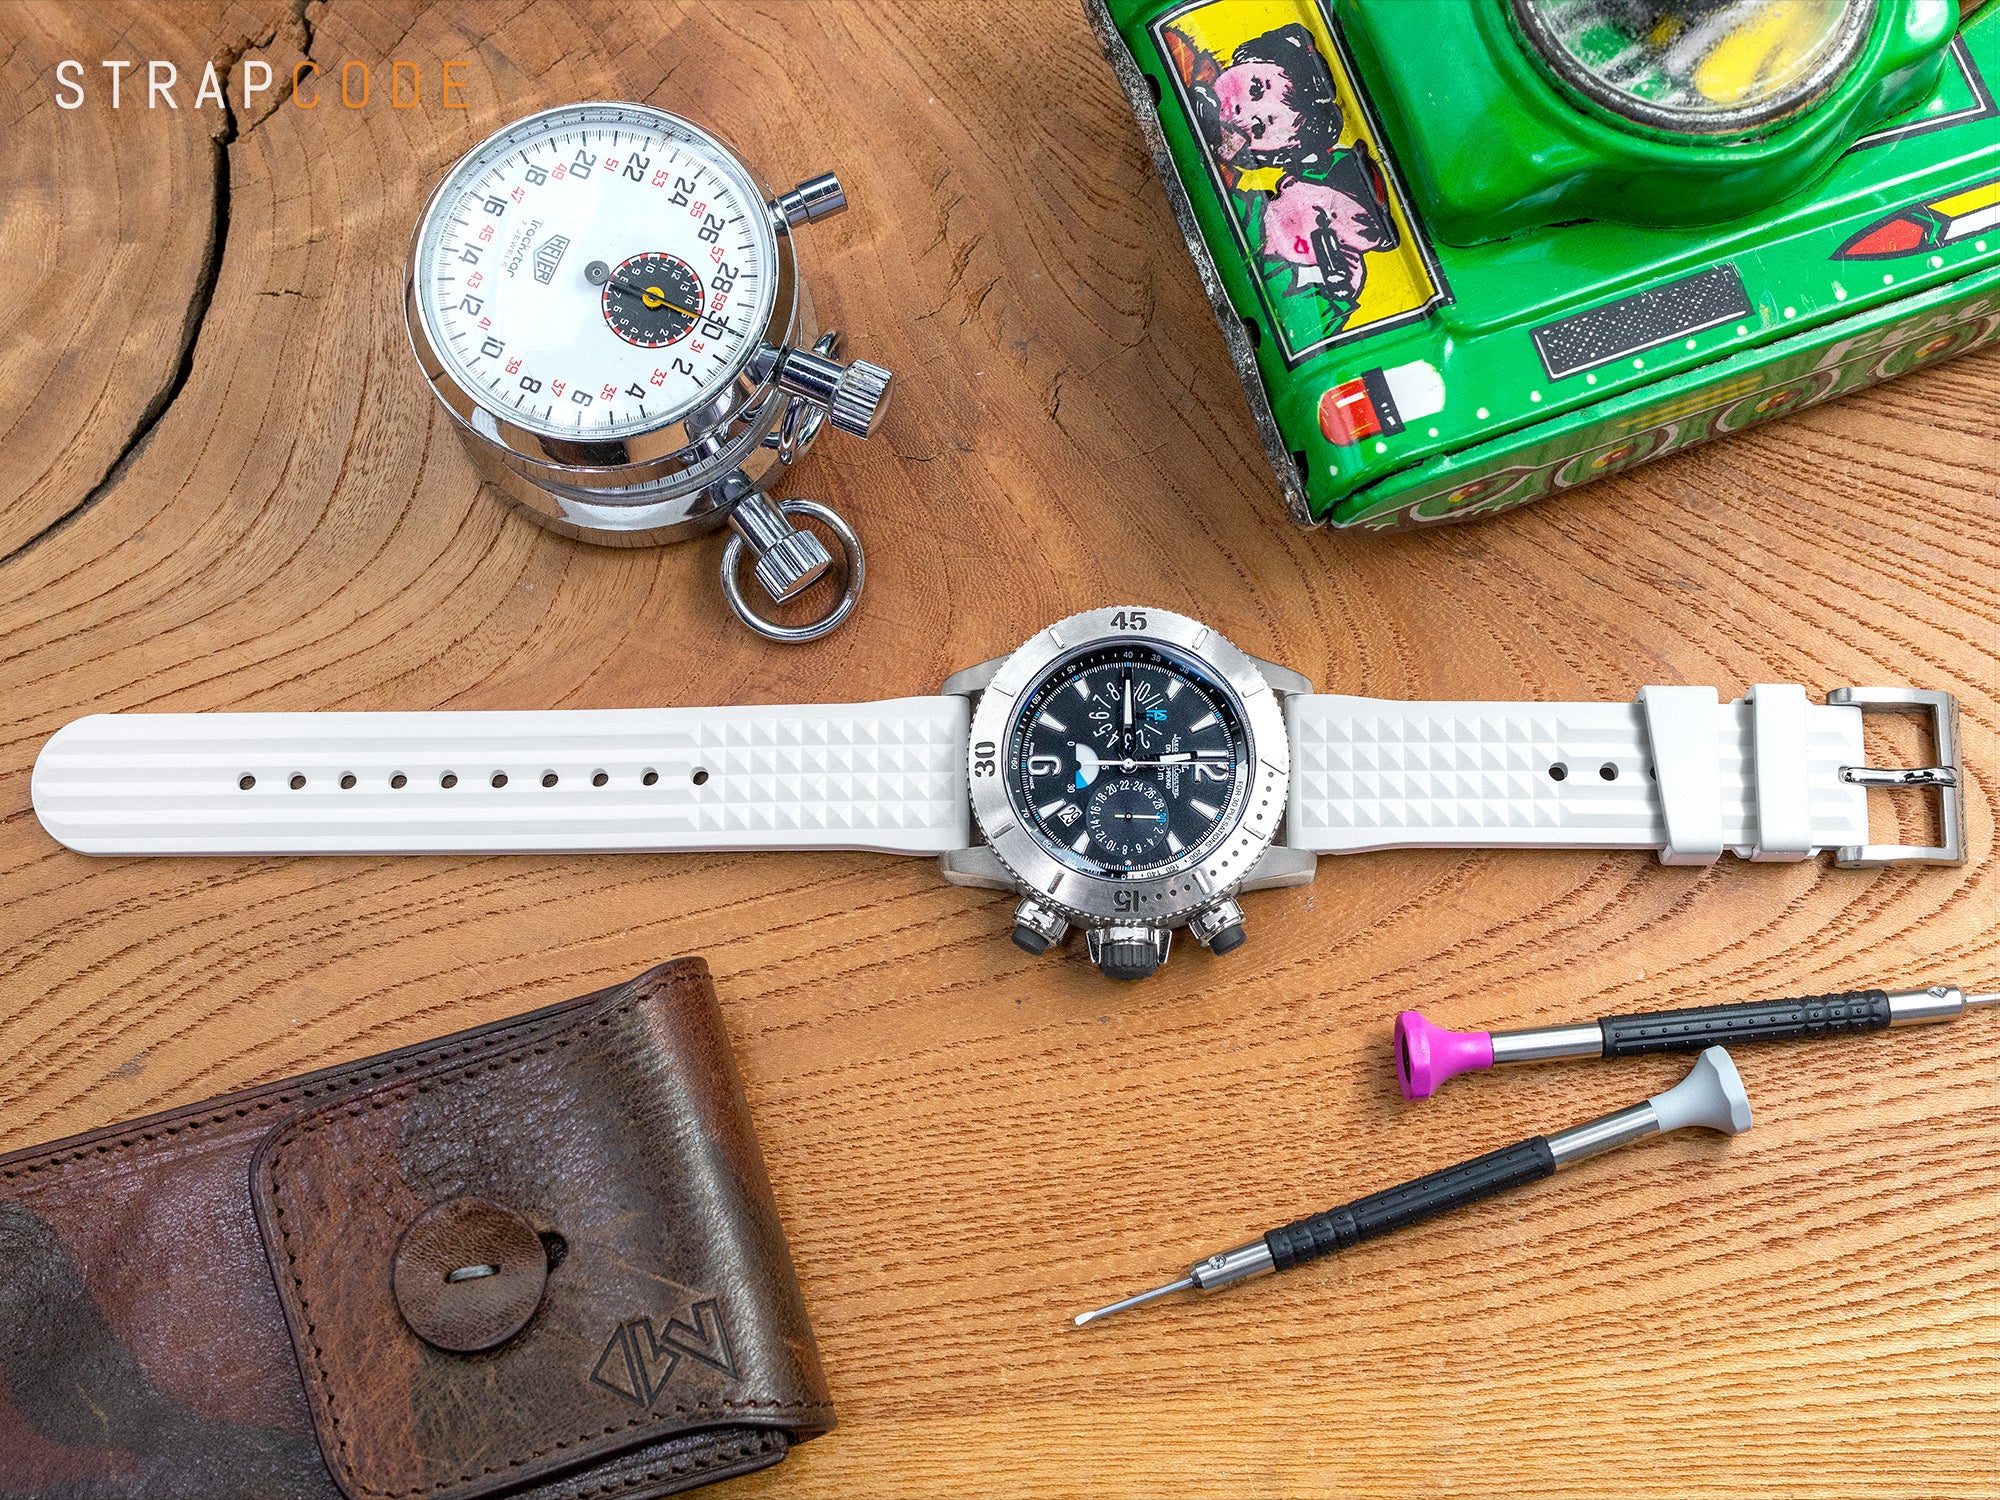 The Chaffle White FKM Rubber watch strap by Strapcode, Jaeger LeCoultre Master Compressor Diver Chronograph Titanium Q186T670.